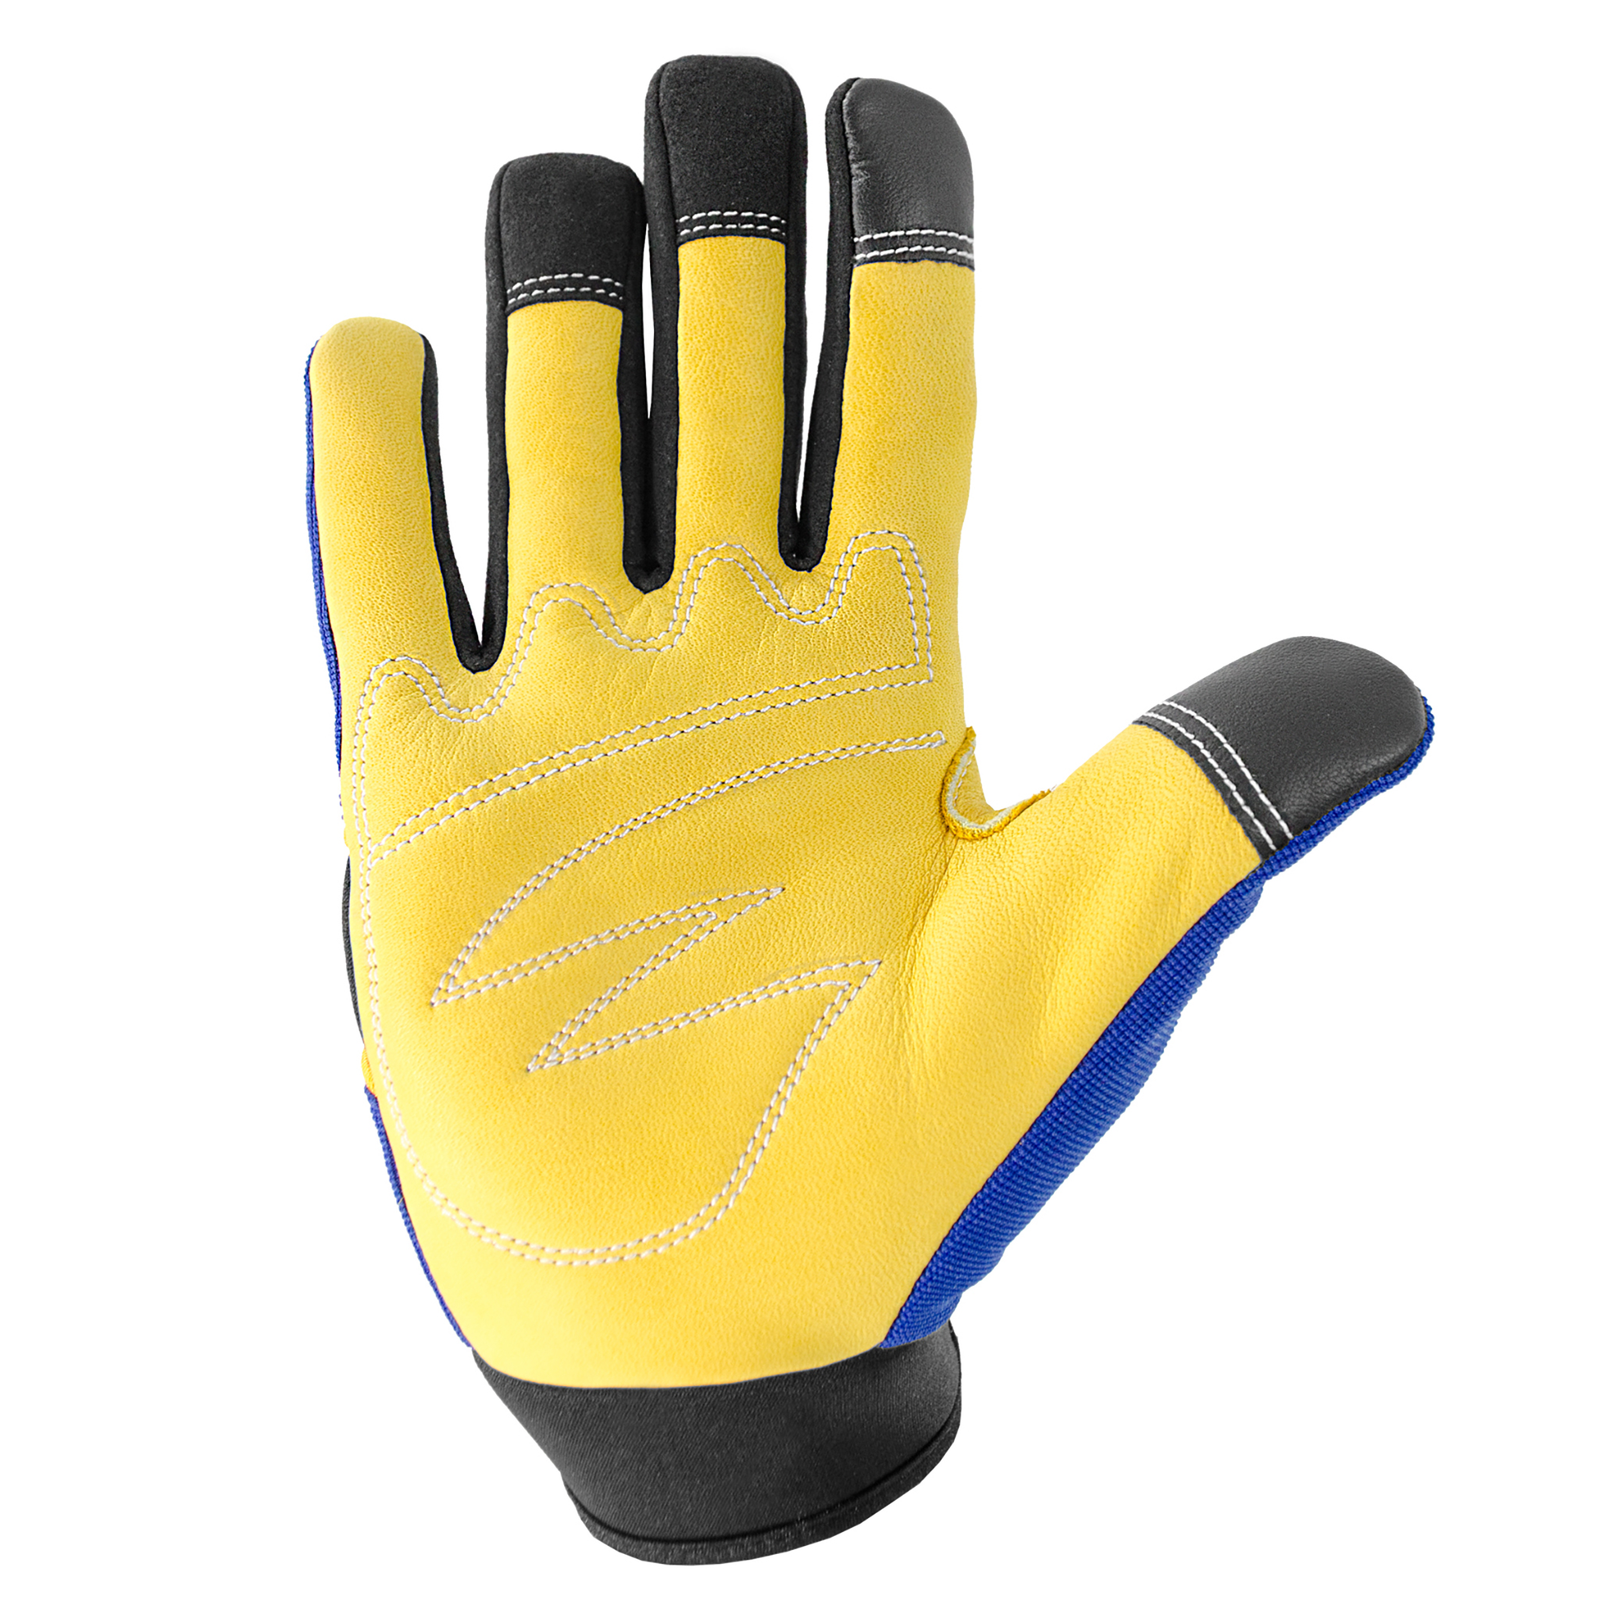 Leather palm of 1 blue touchscreen JORESTECH safety work glove